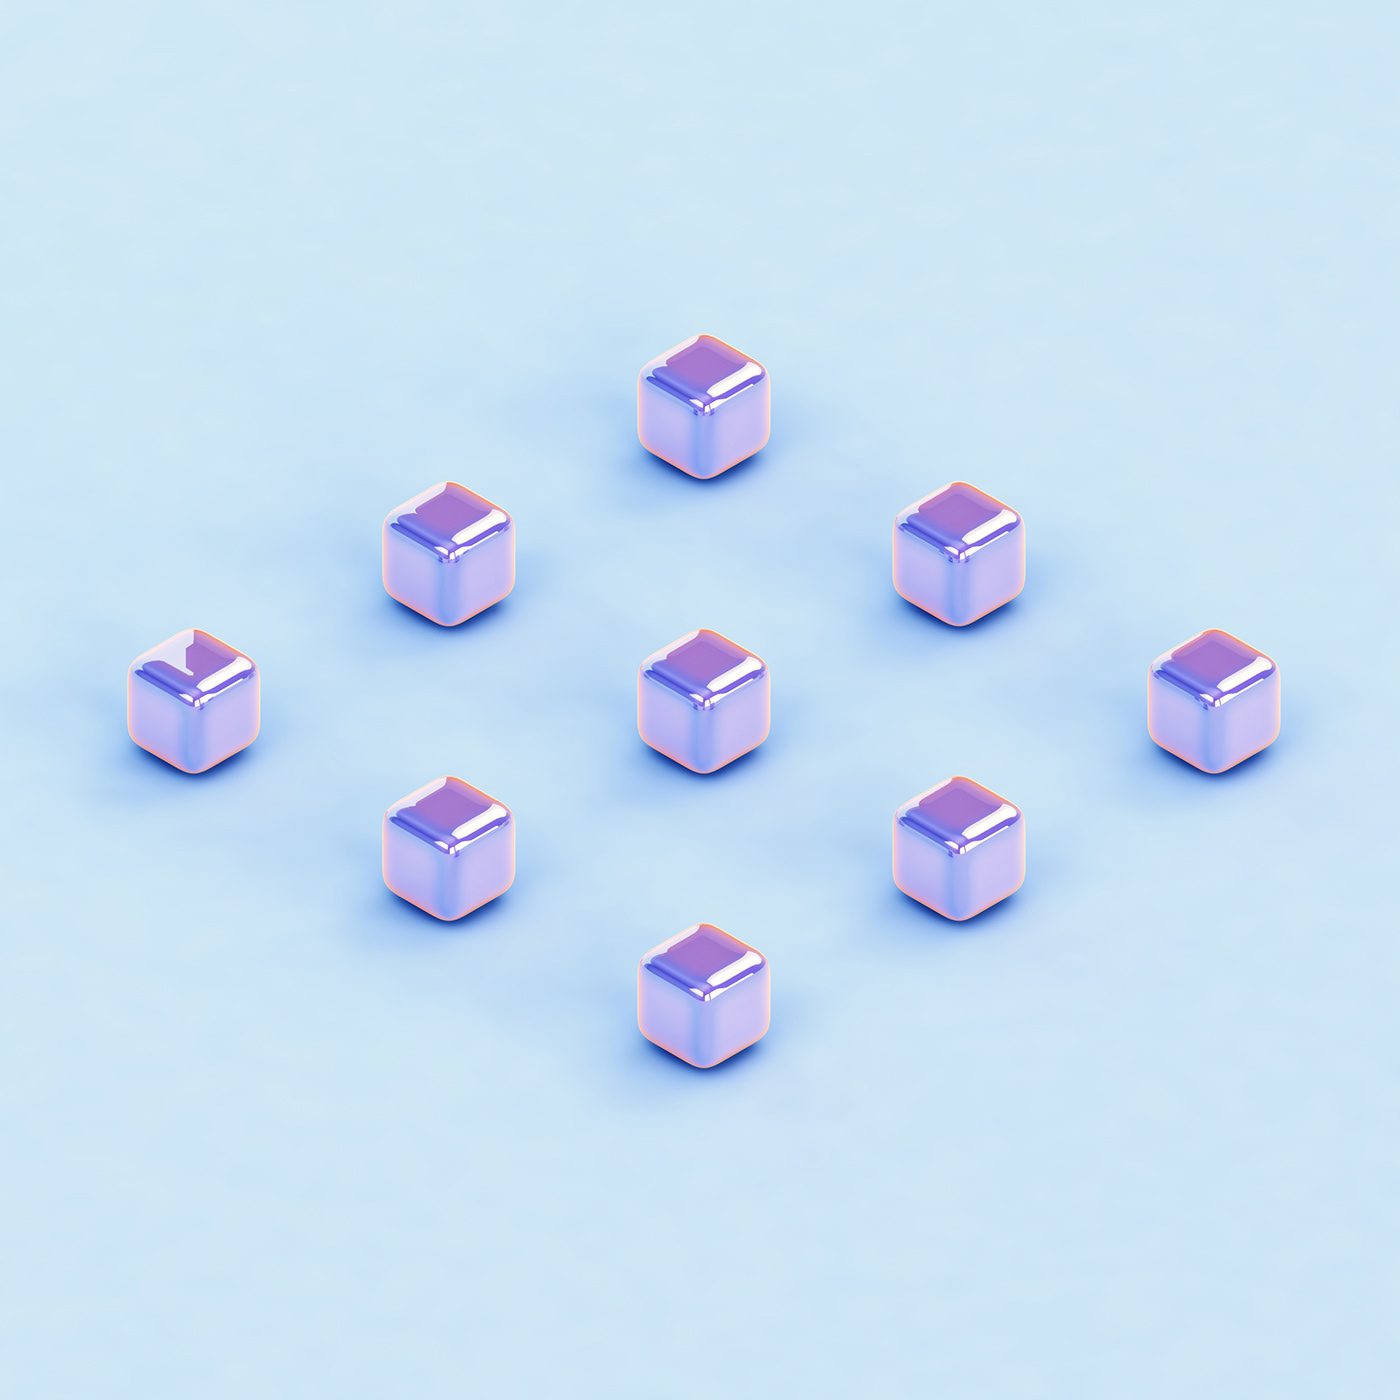 3D art brand c4d cube holographic iridescent minimal unicorn freebie